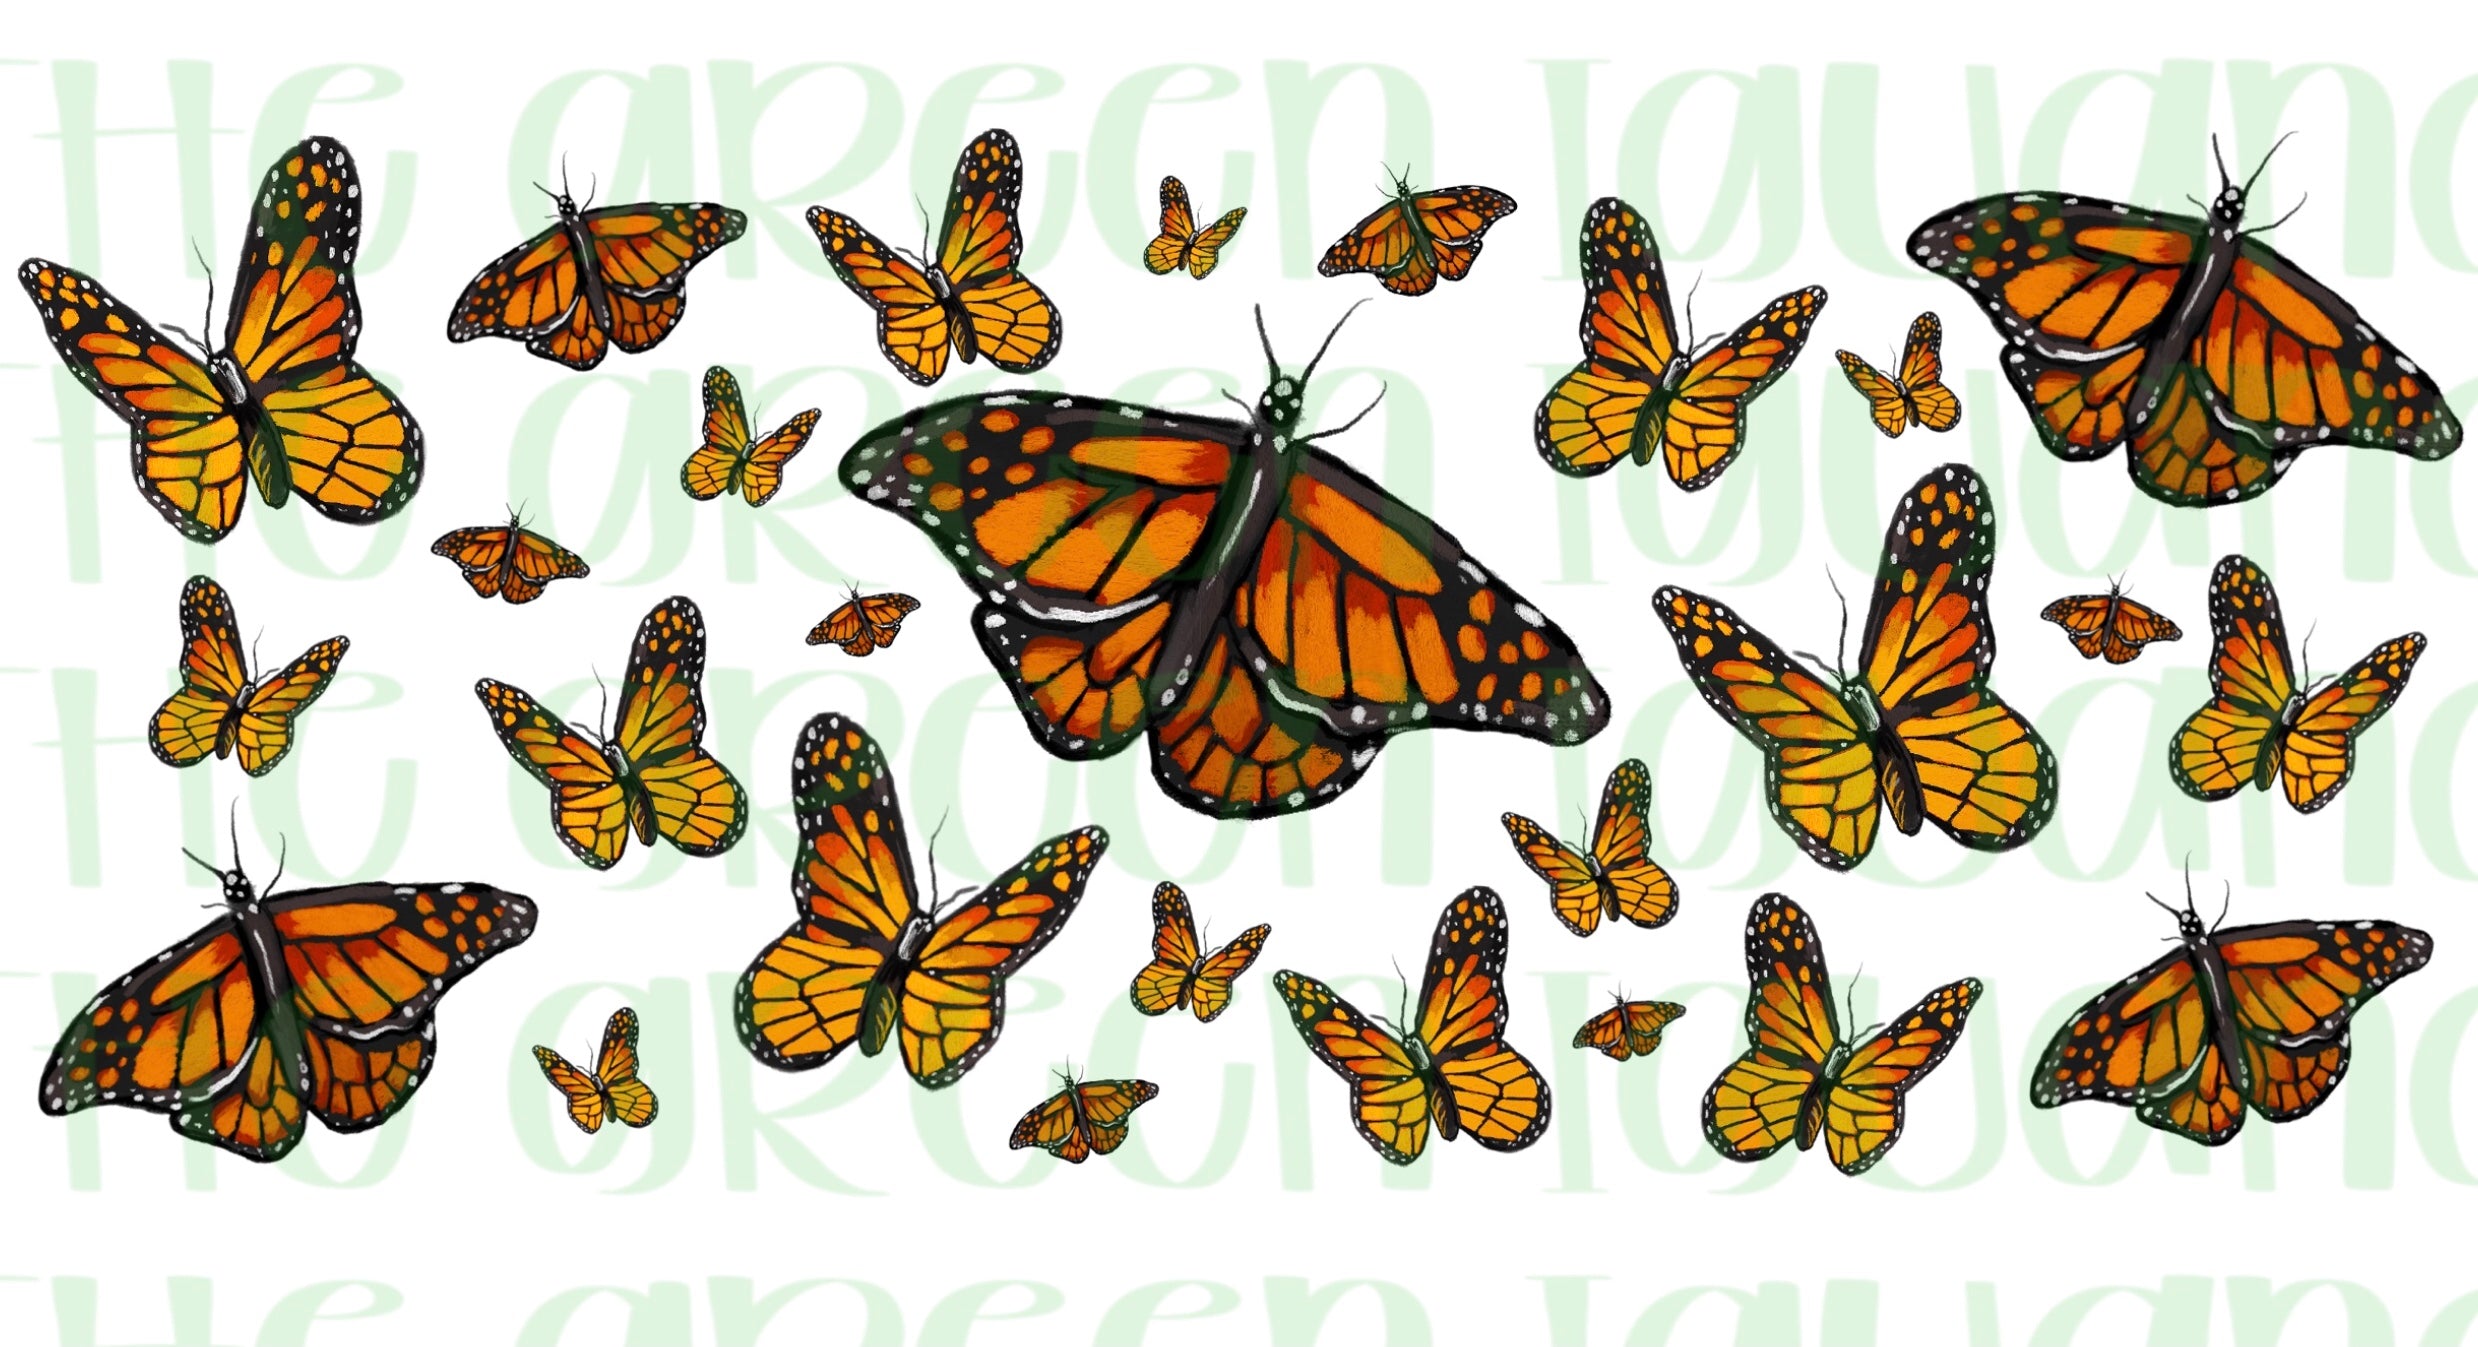 Butterfly 16oz libby wrap - DIGITAL